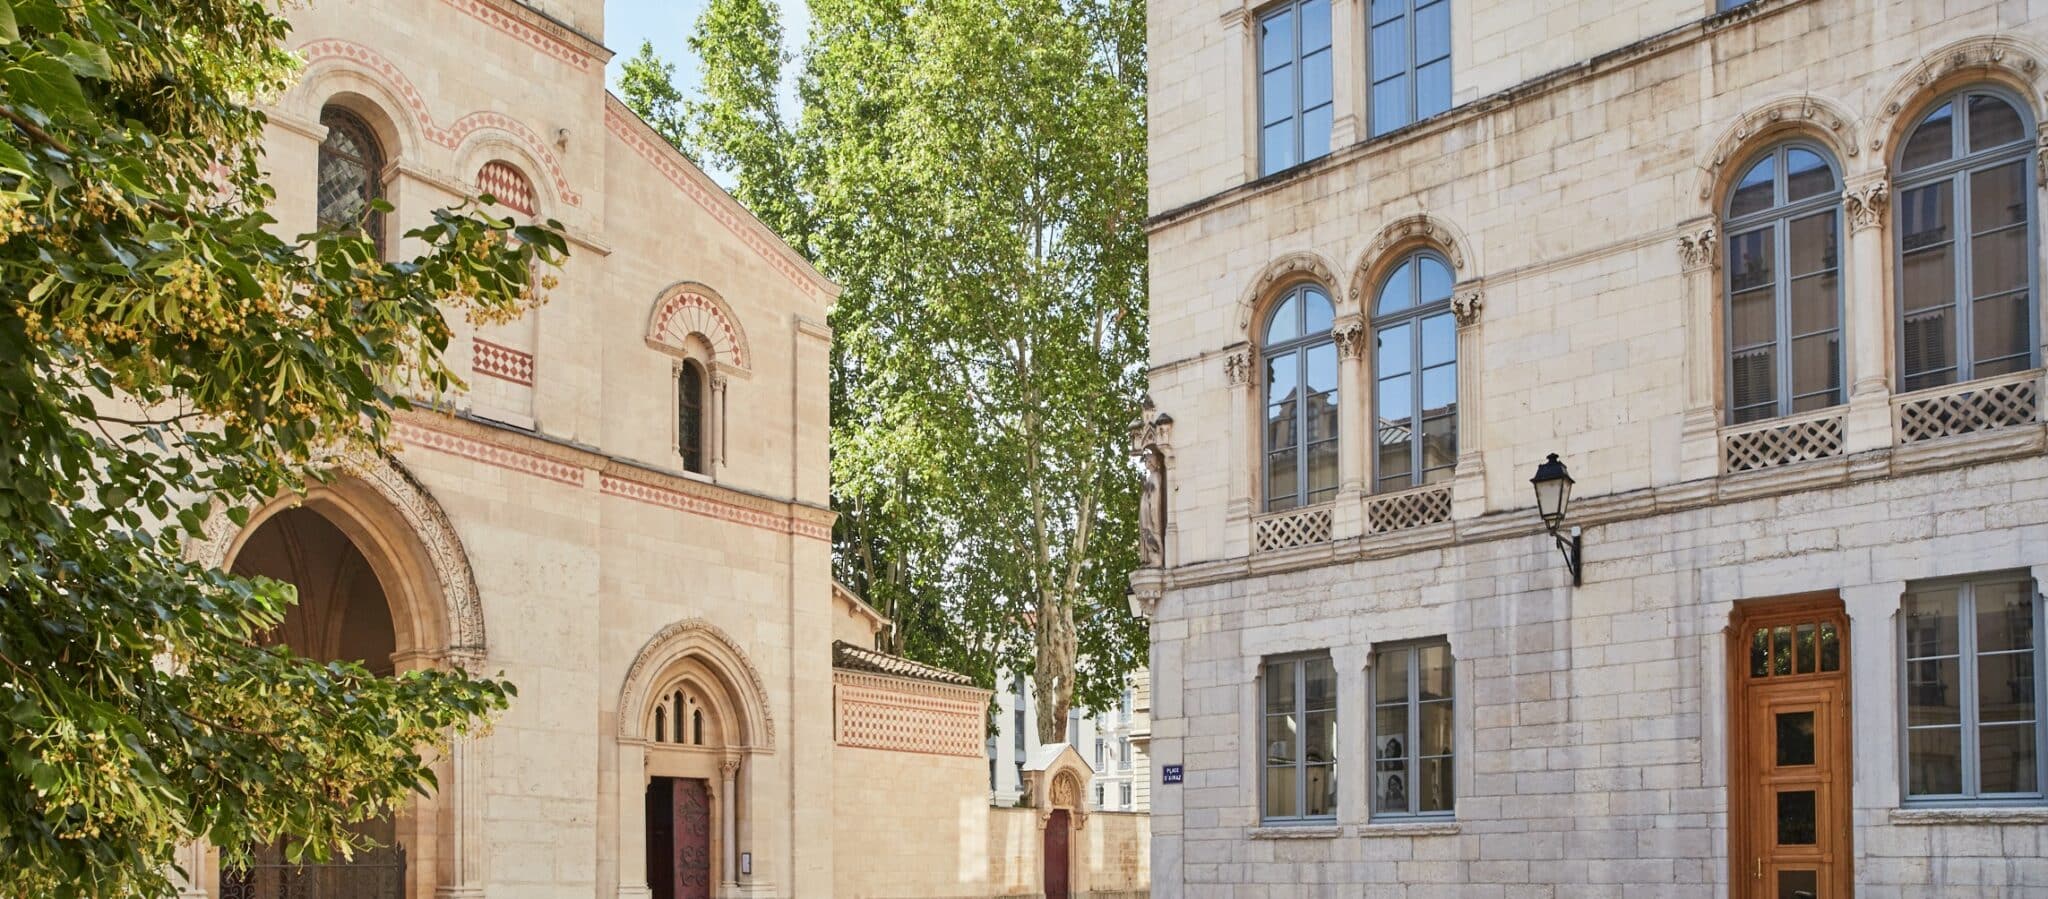 Place de l&#039;Abbaye with, on the left, the facade of the Basilica - Abbey Saint-Martin d&#039;Ainay and, on the right, the facade of the Hôtel de l&#039;Abbaye and the Café Basilic